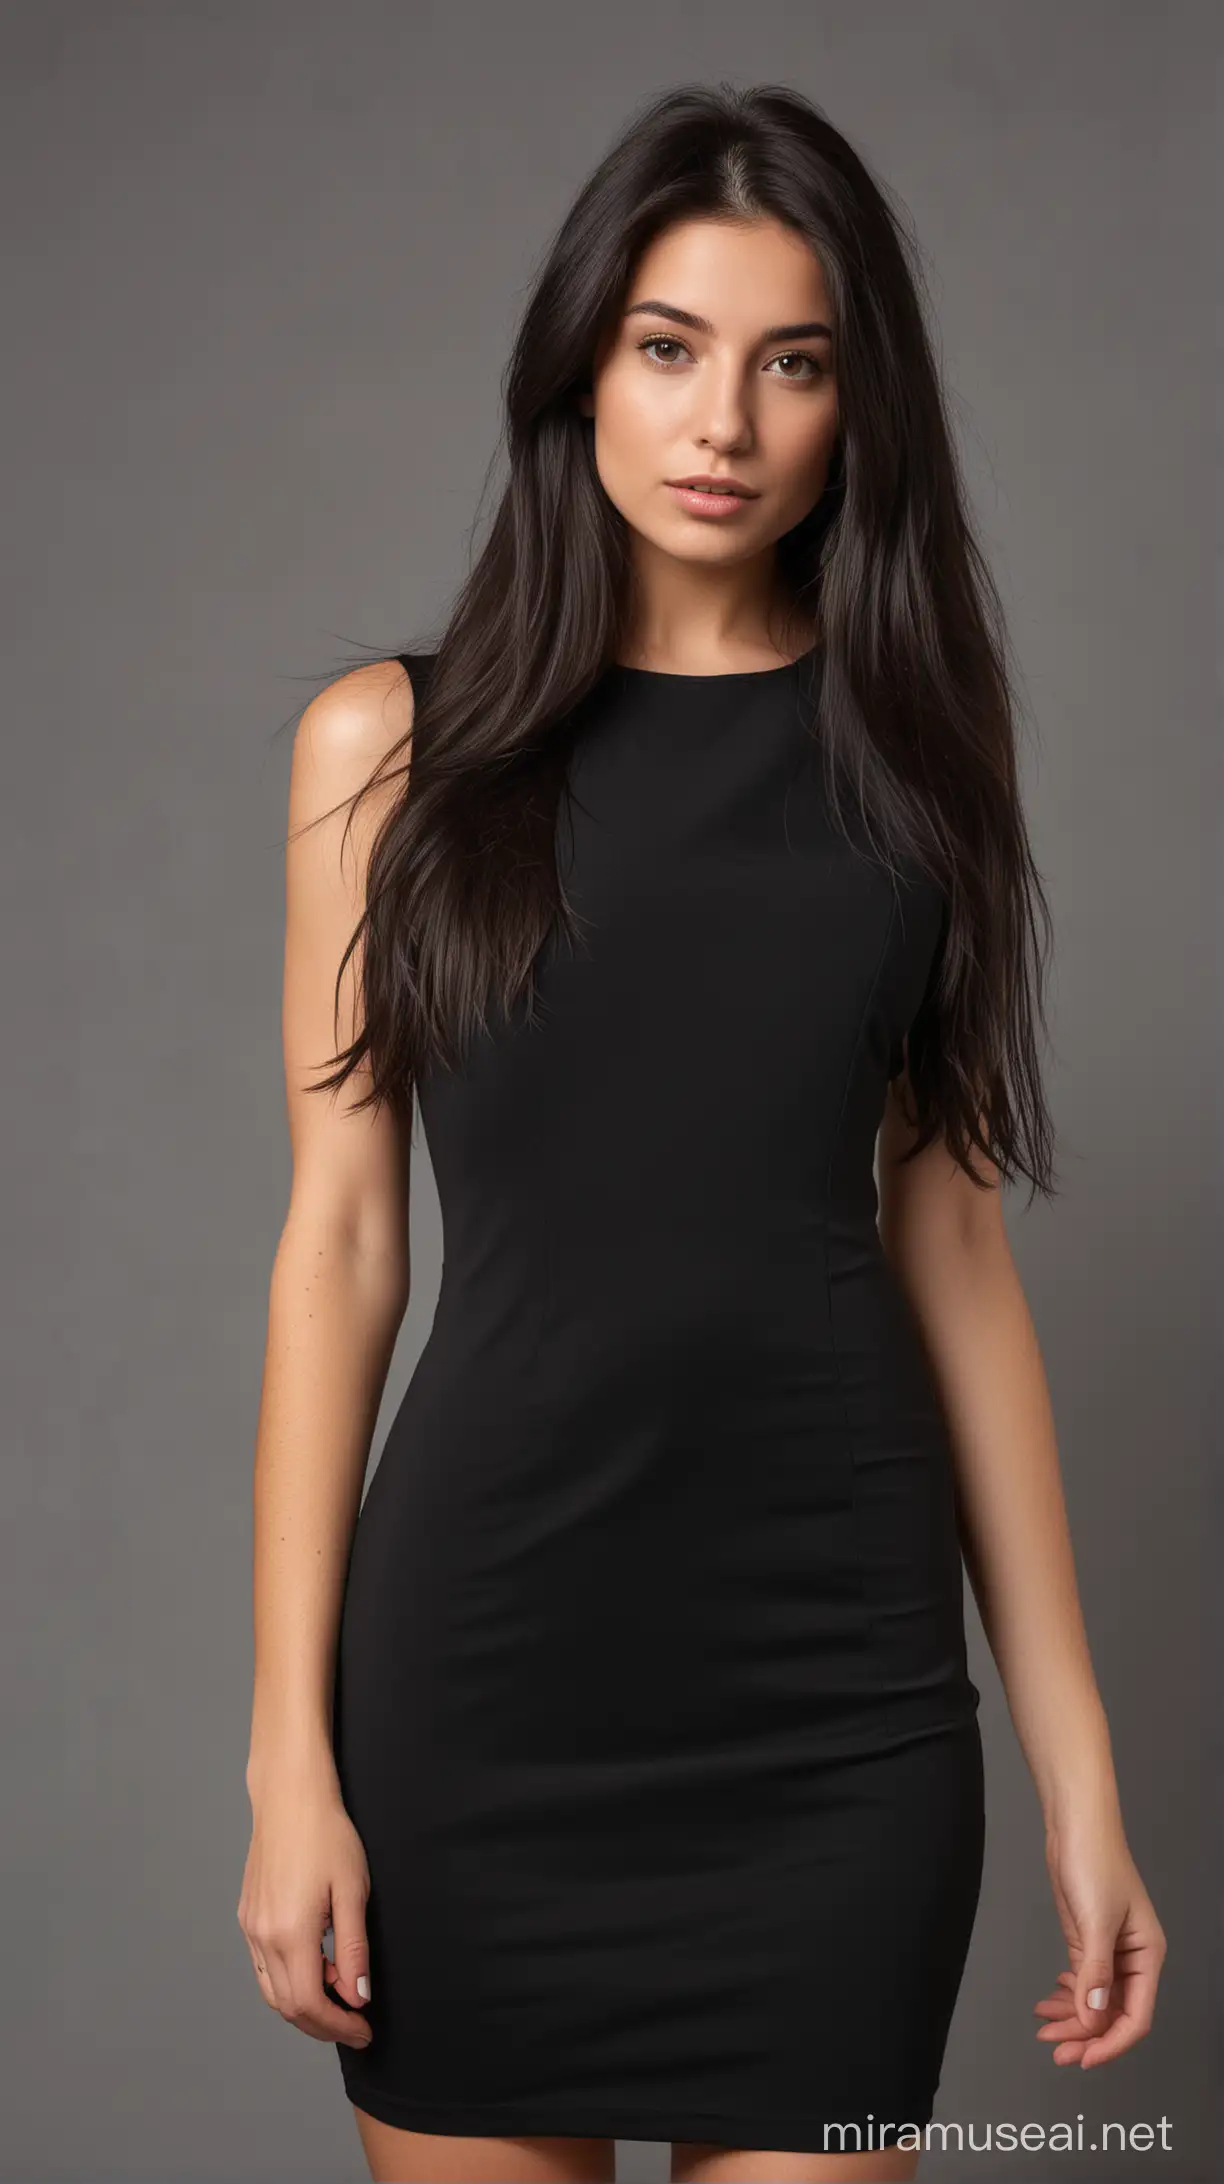 Elegant LongHaired Woman in Black Mini Dress